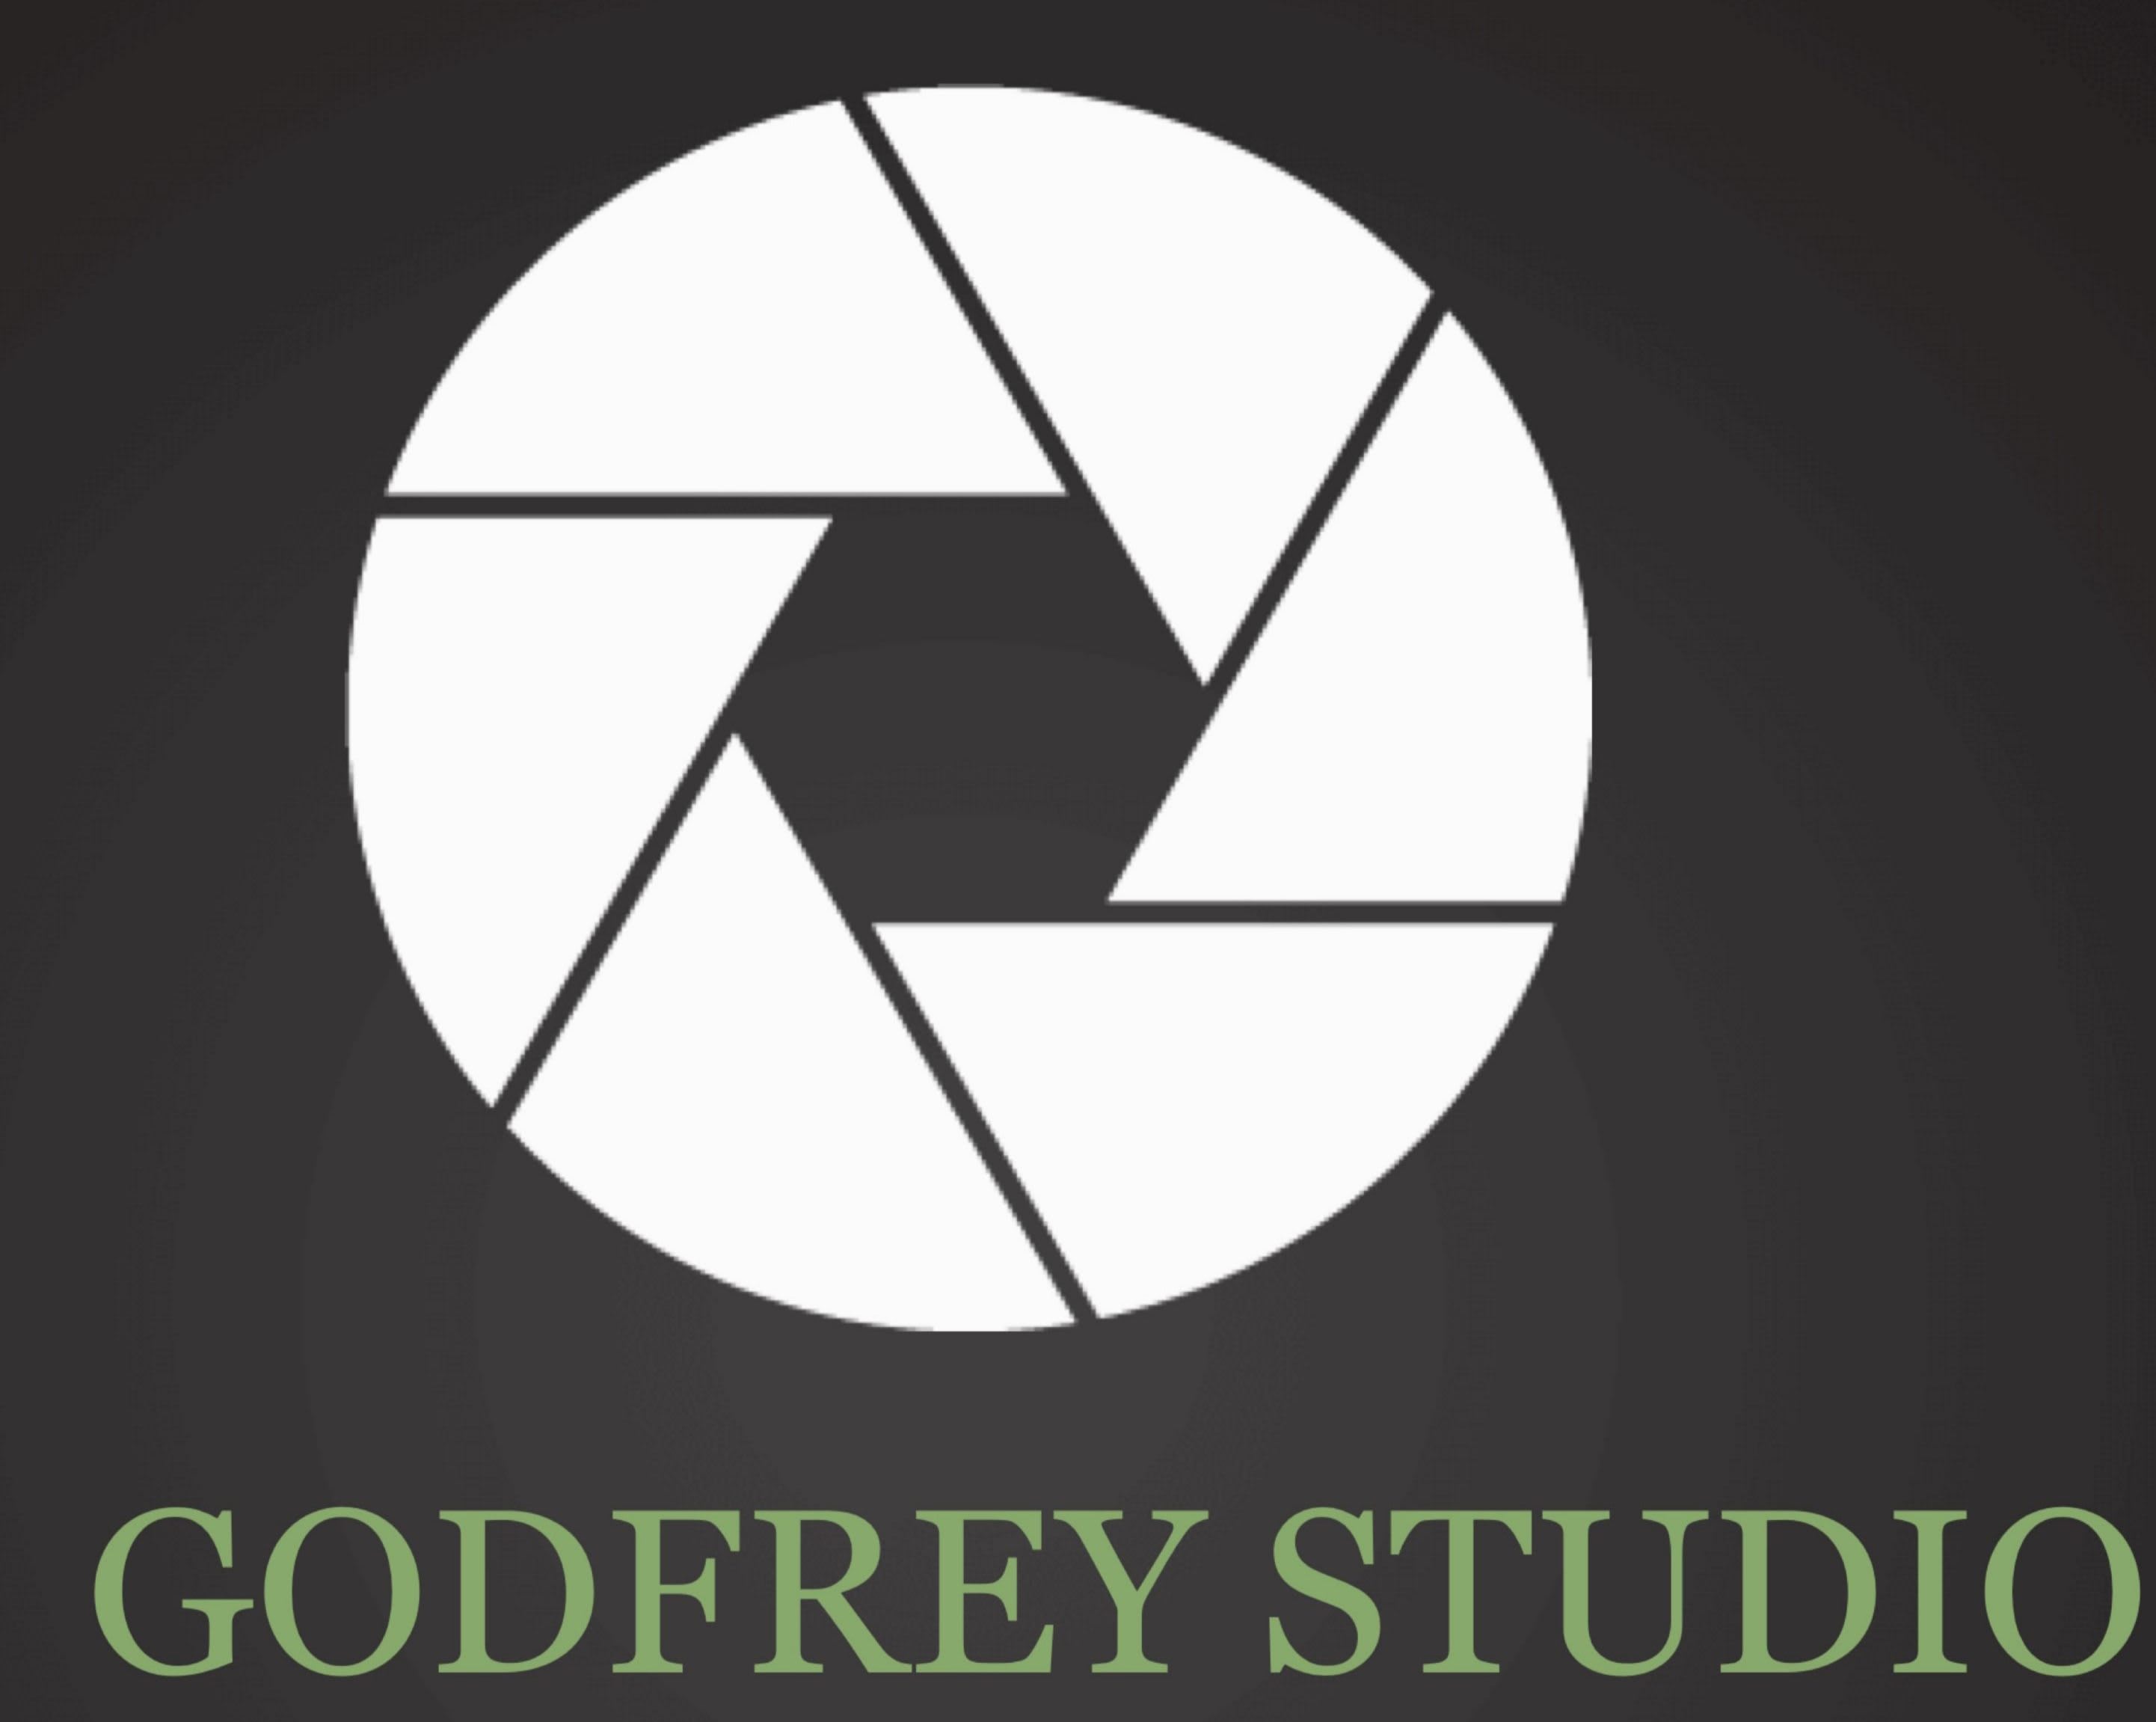 Godfrey Record Label